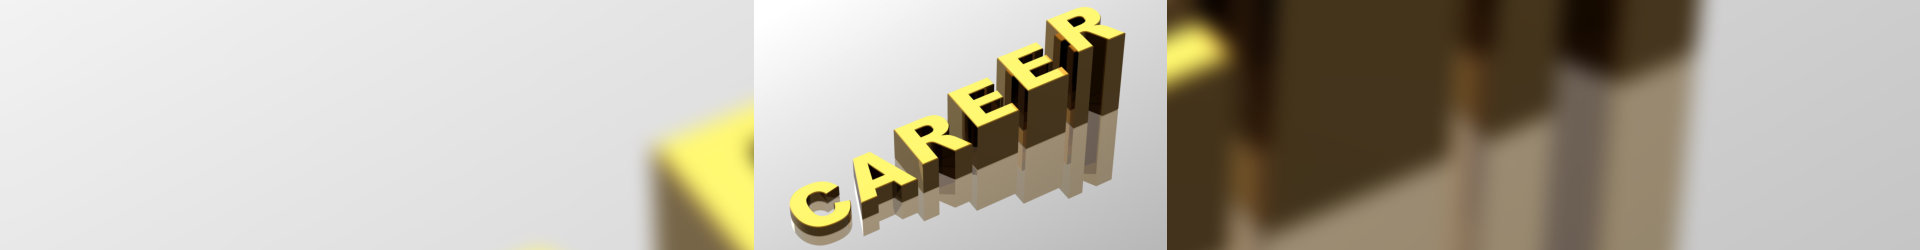 career forming a ladder